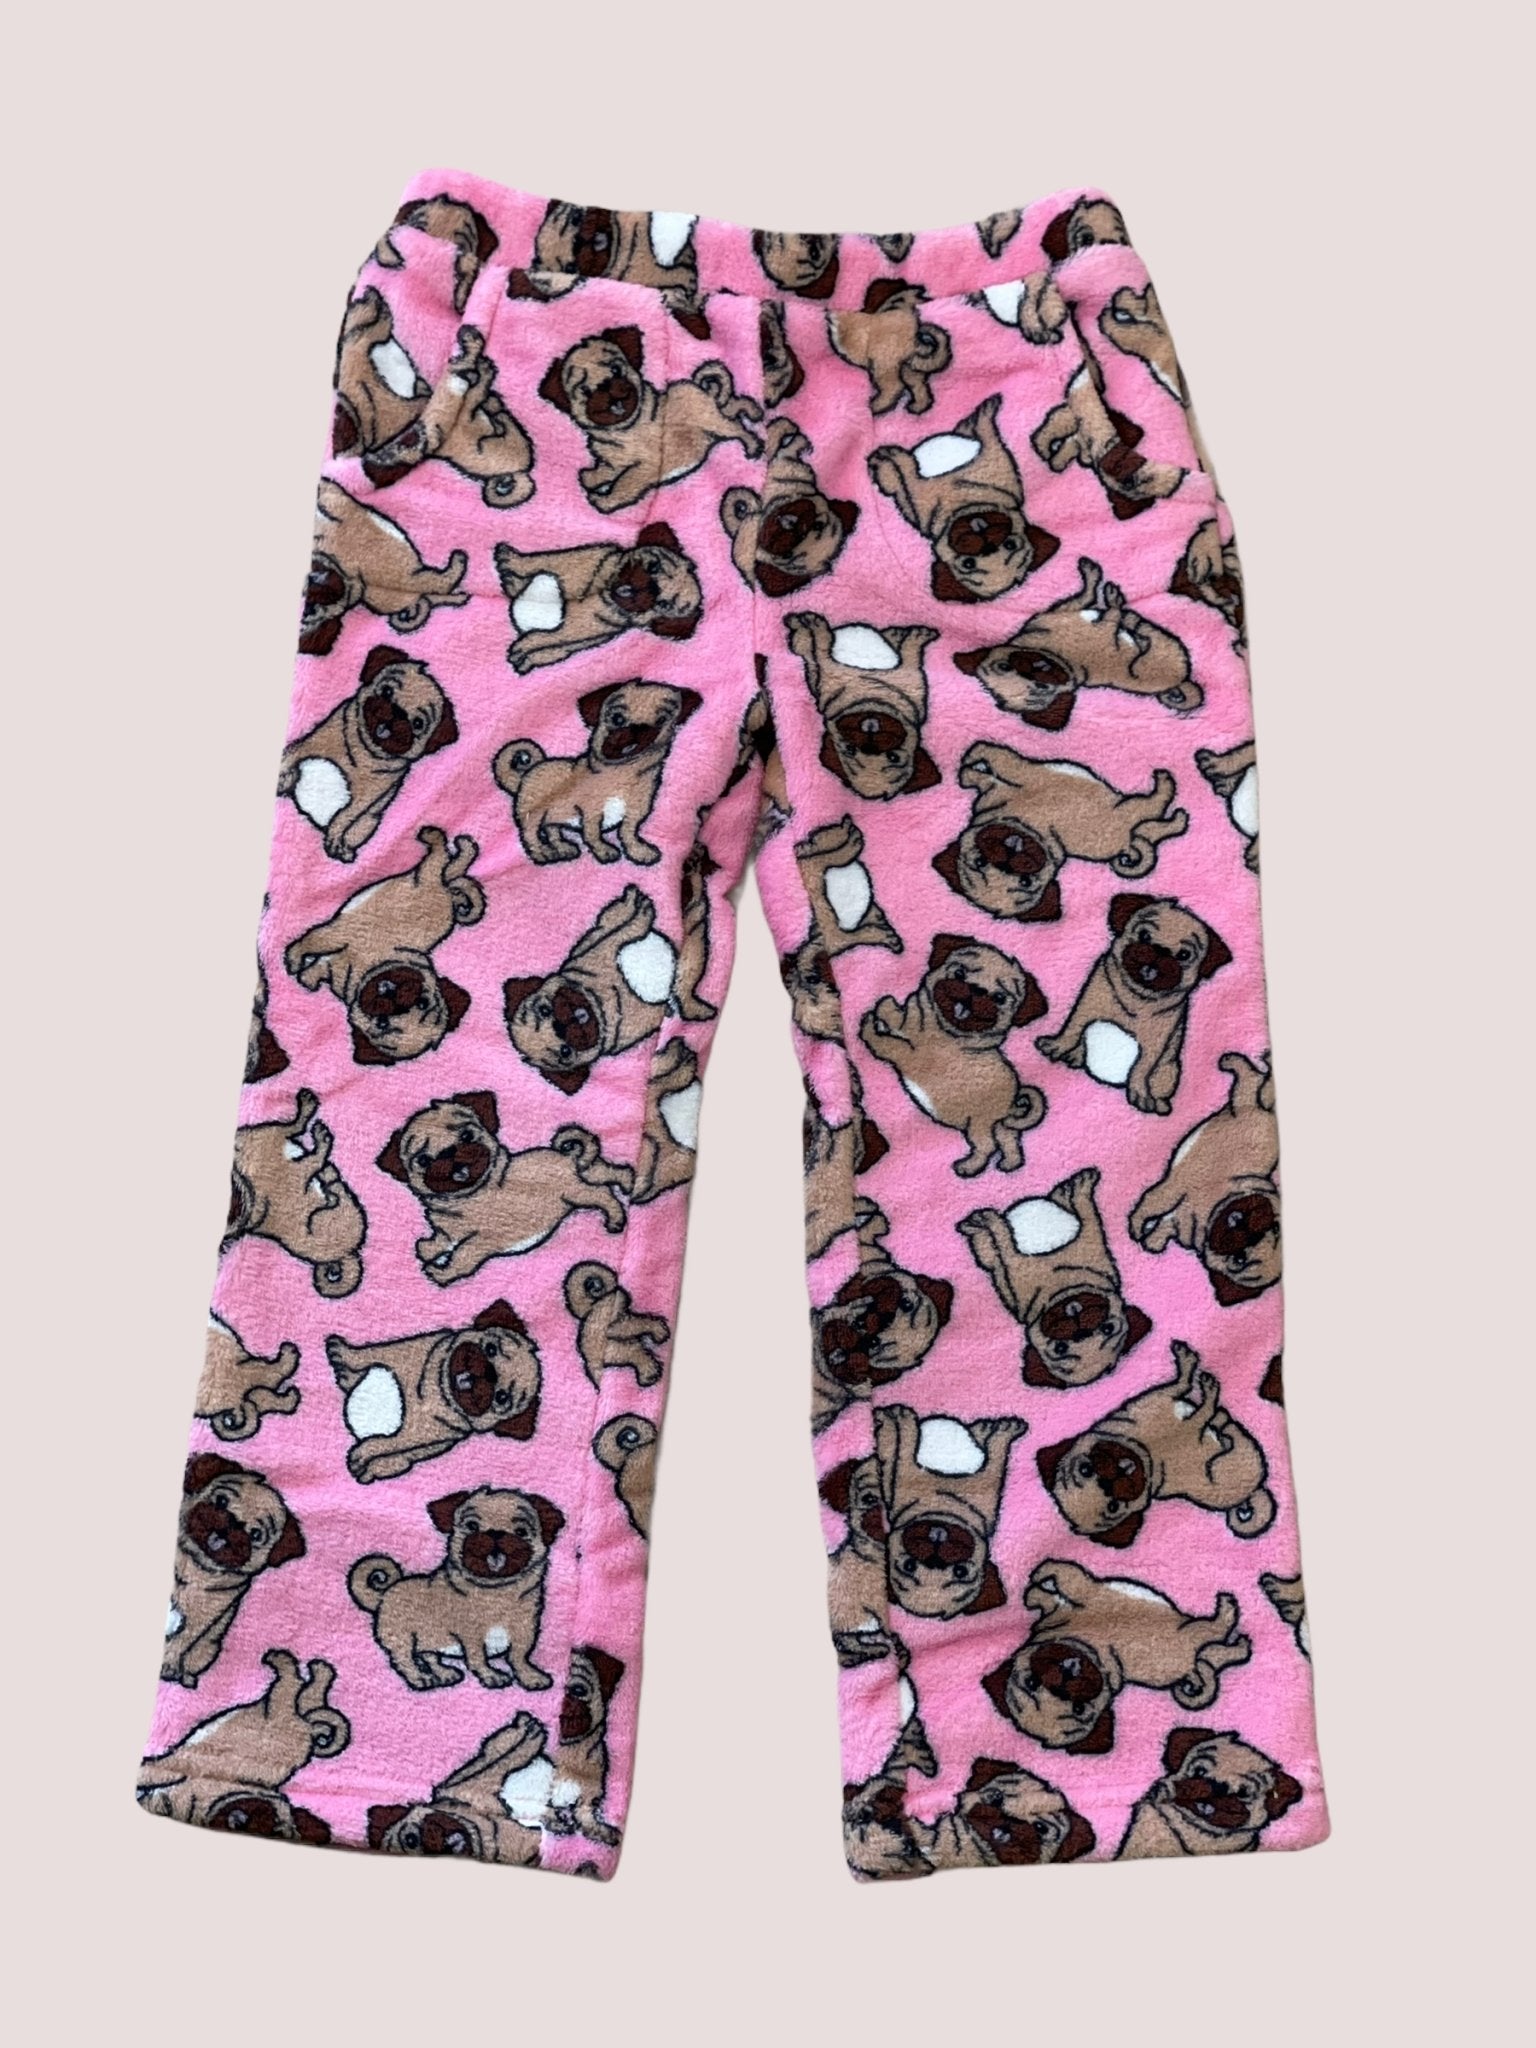 Candy Pink Girls Fleece Pajama Pants in Pug Dog Pattern